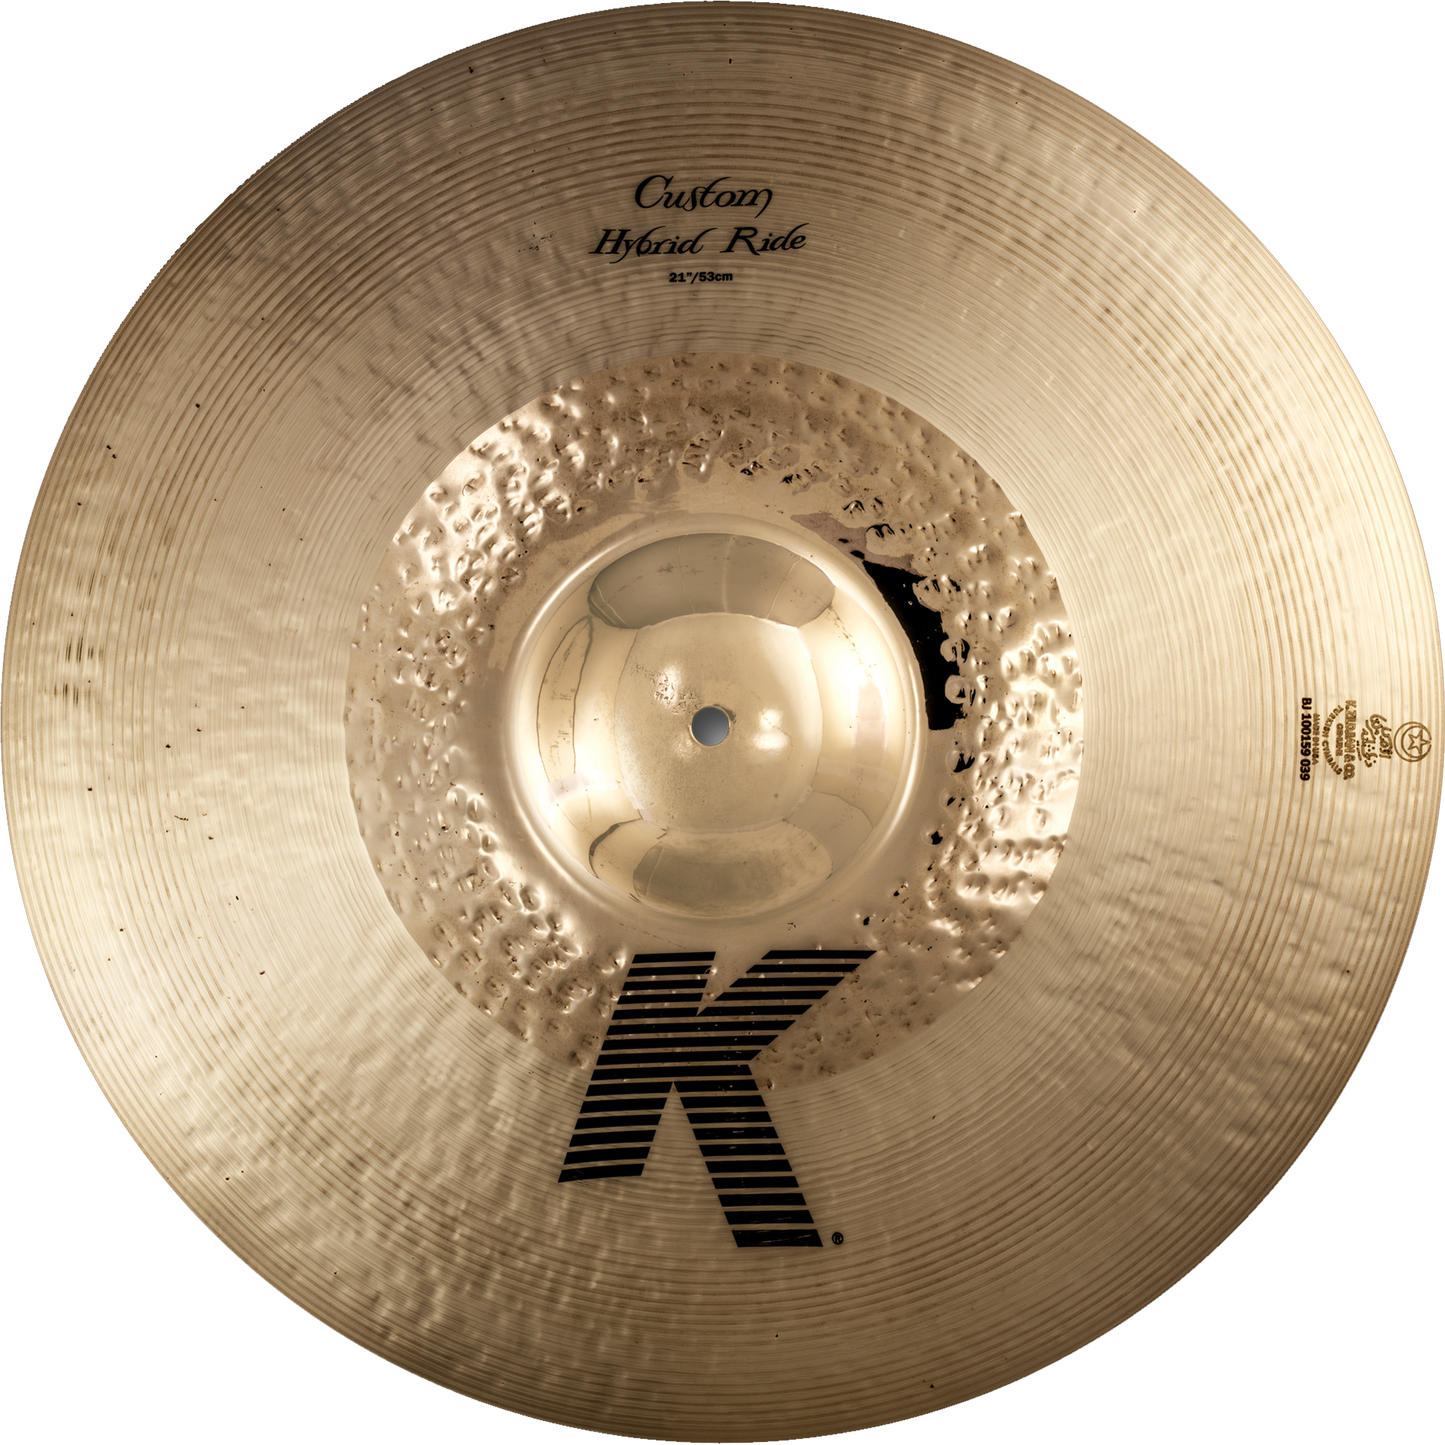 Zildjian 21” K Custom Hybrid Ride Cymbal